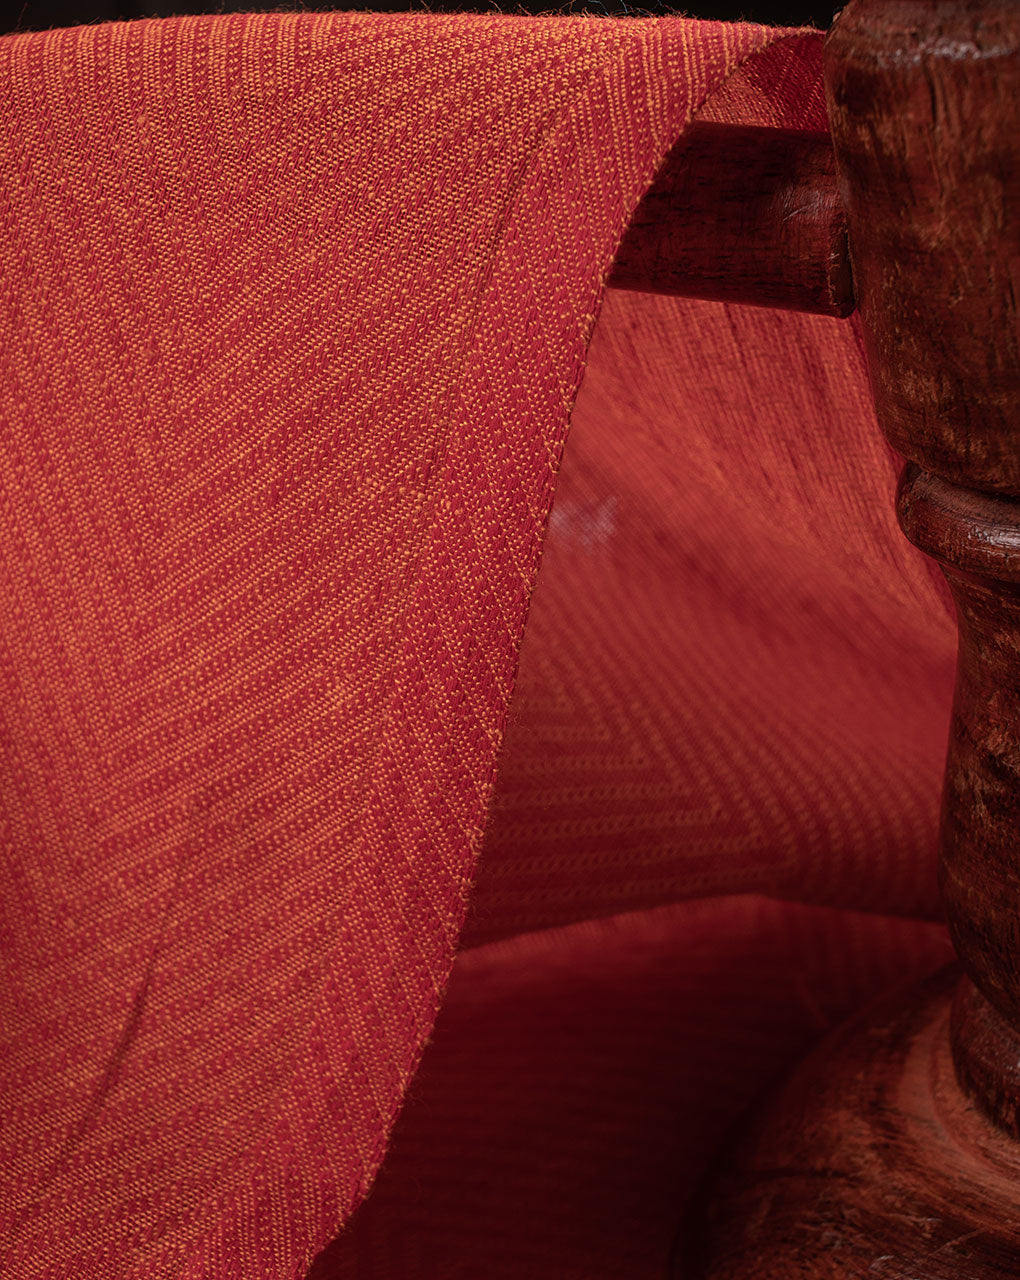 Chevron Woven Dobby Loom Textured Cotton Fabric - Fabriclore.com